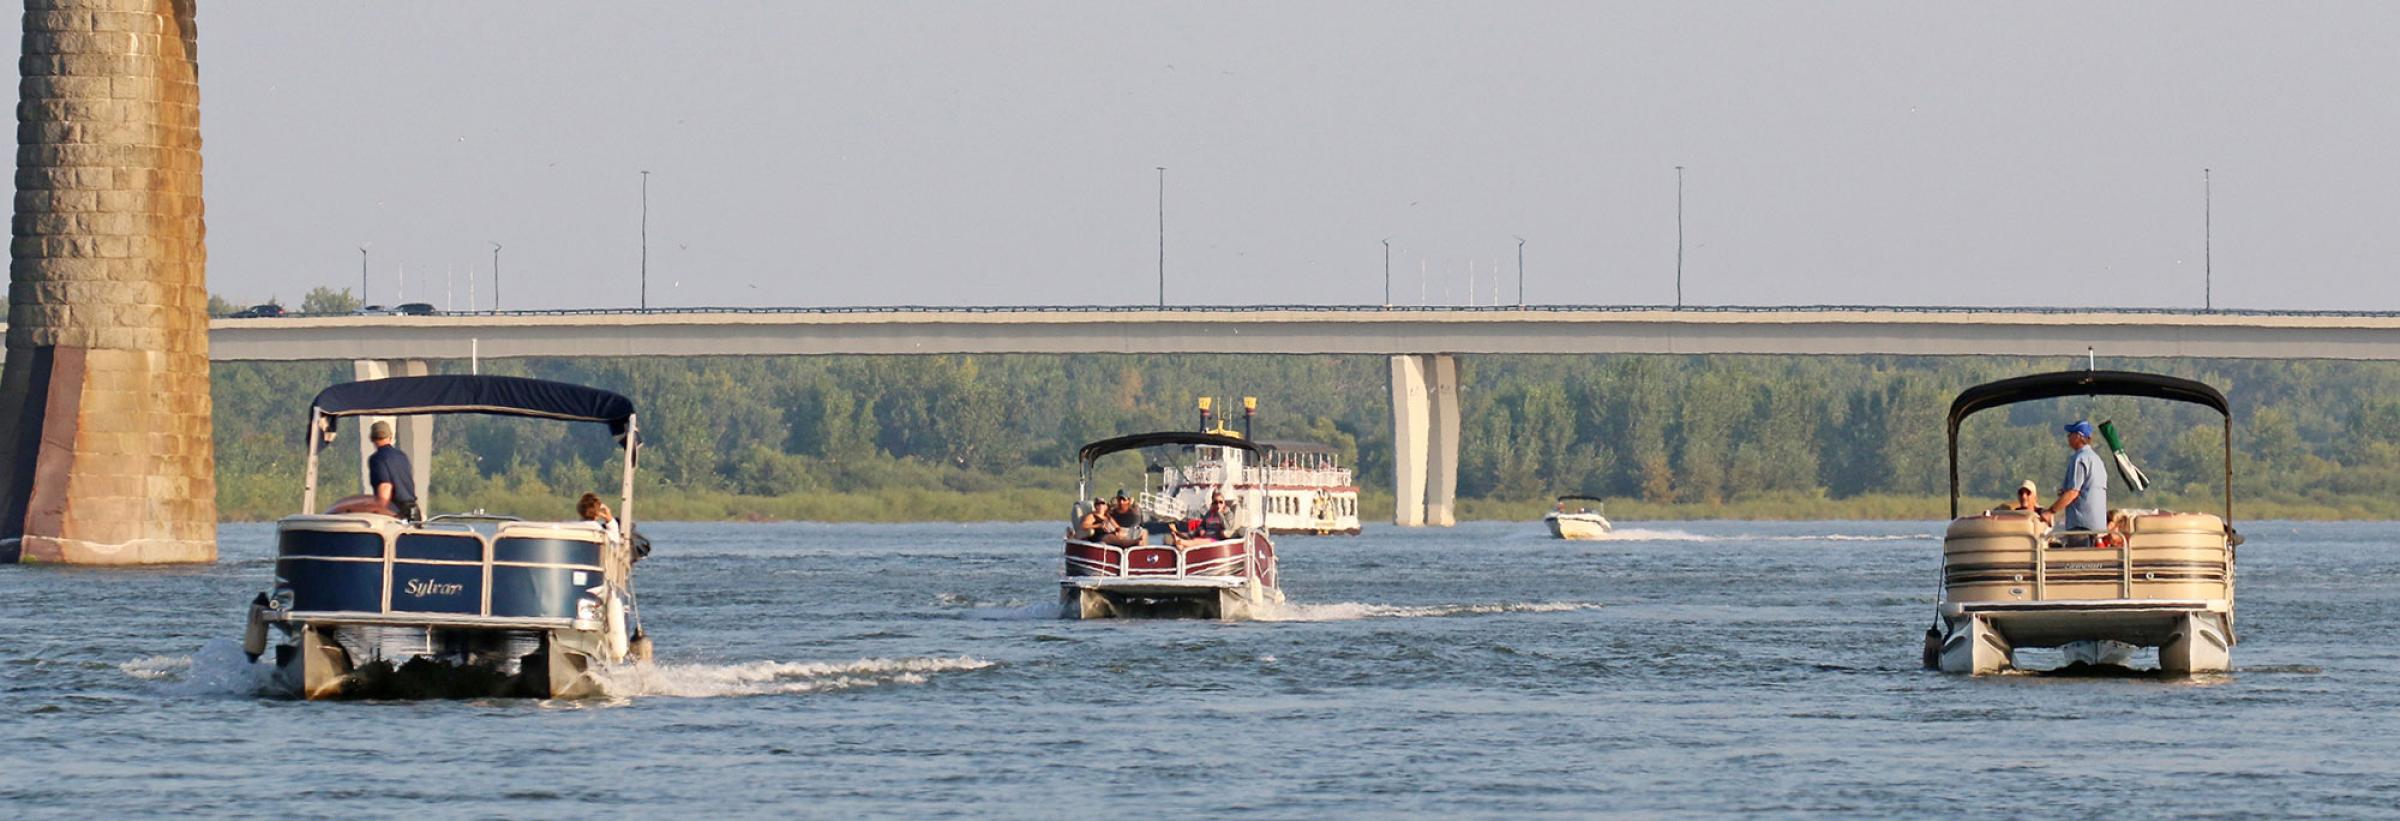 Boats on Missouri River